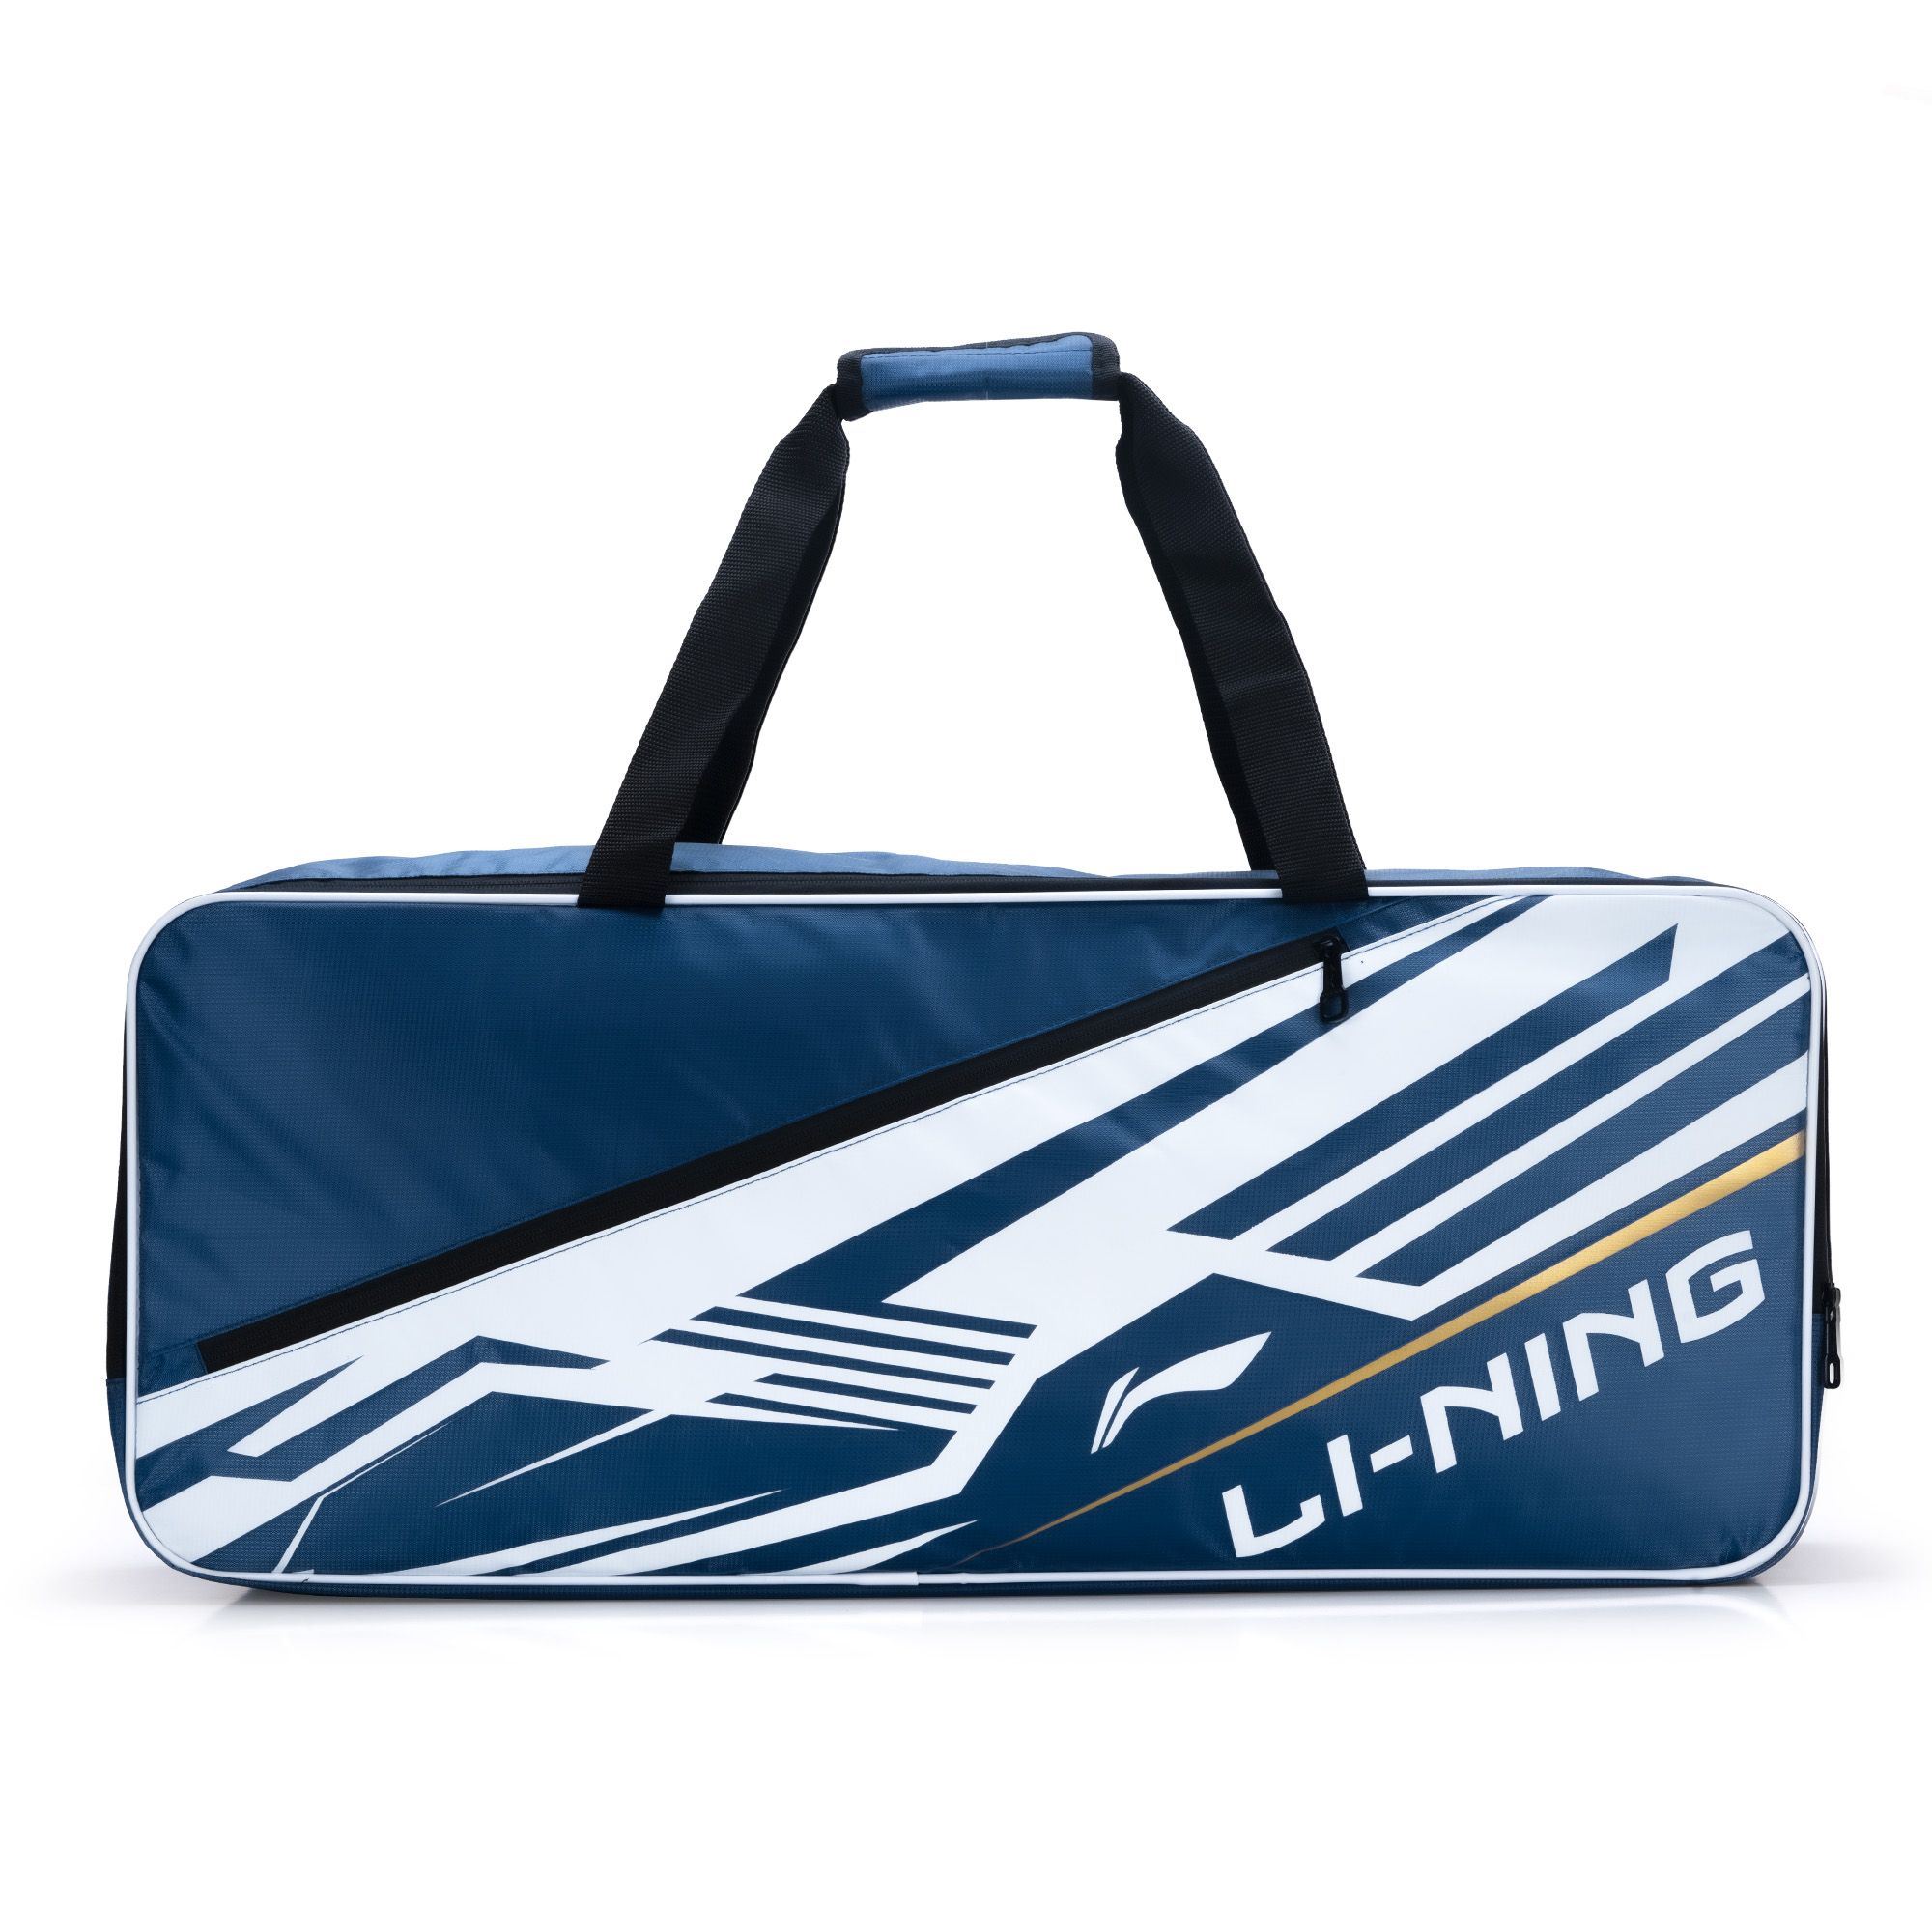 Li-Ning Crato Kit Bag | Li-Ning Studio - Official Li-Ning Store